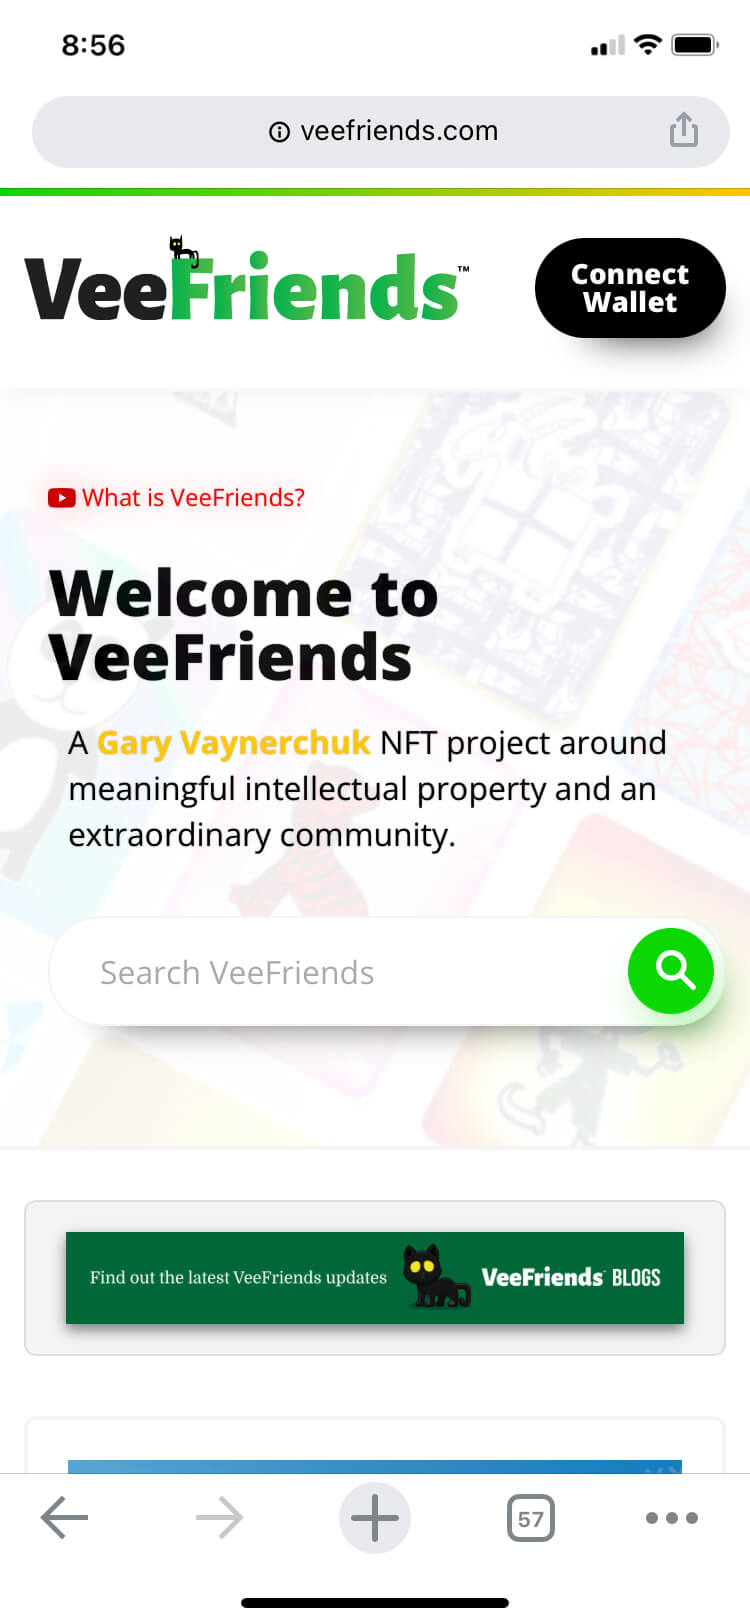 veefriends-website-intellectural-property-nft-project-example-social-media-examiner